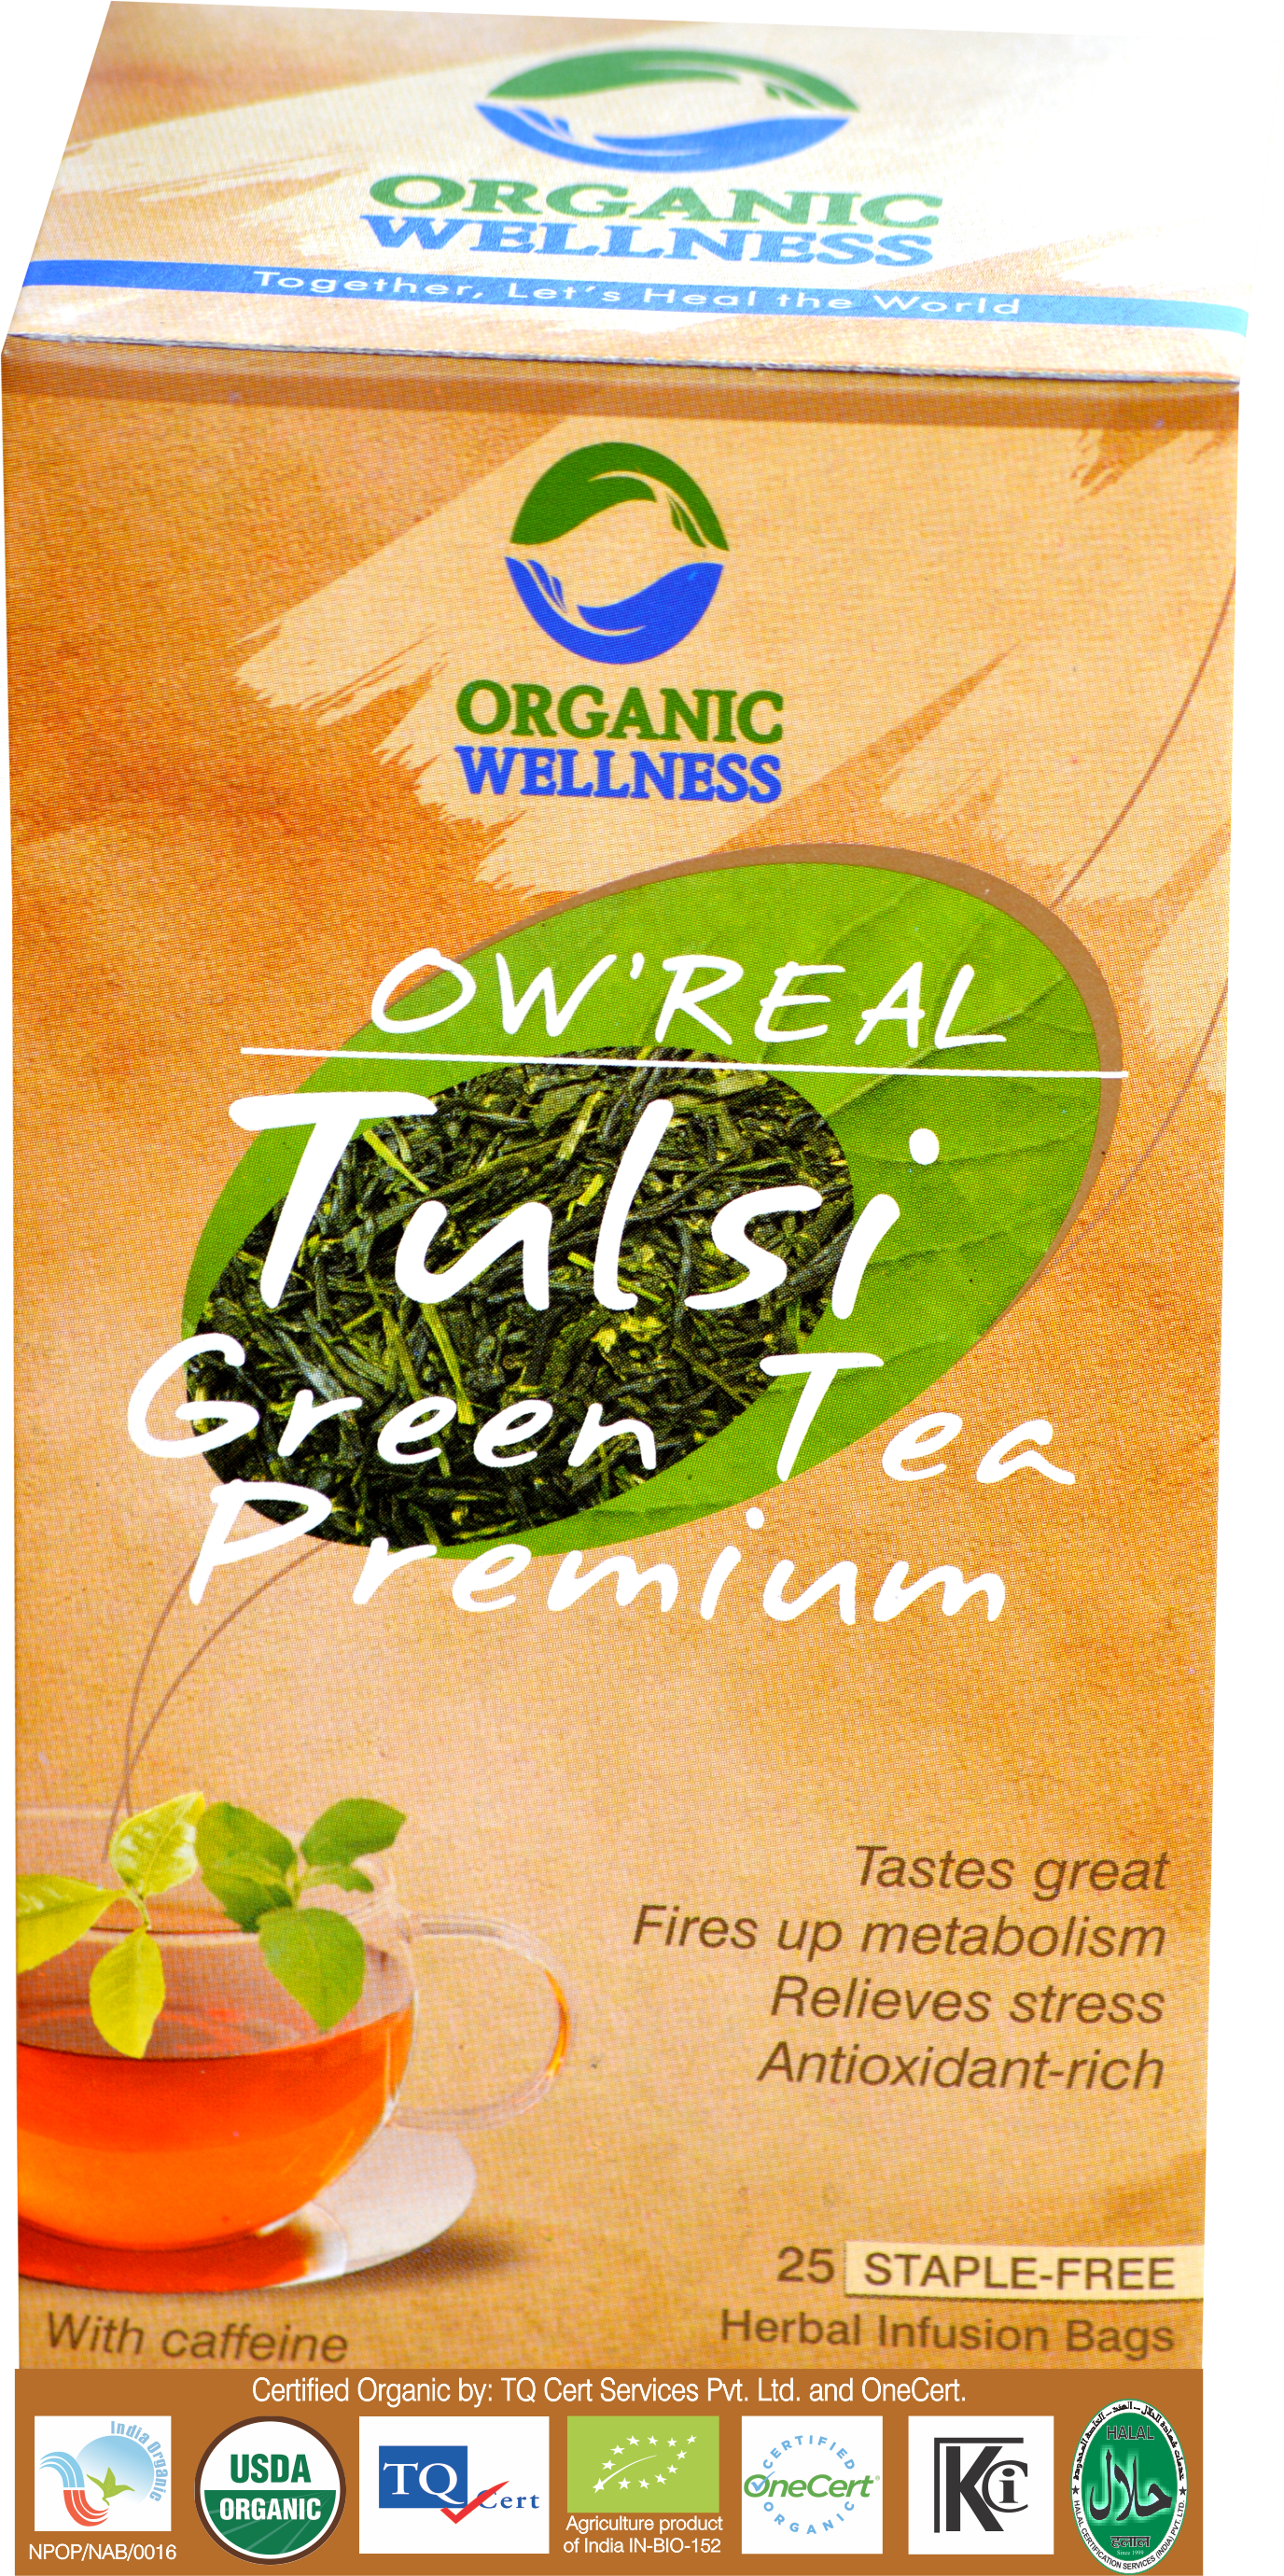 Buy Organic Wellness Real Tulsi Green Tea Premium at Best Price Online